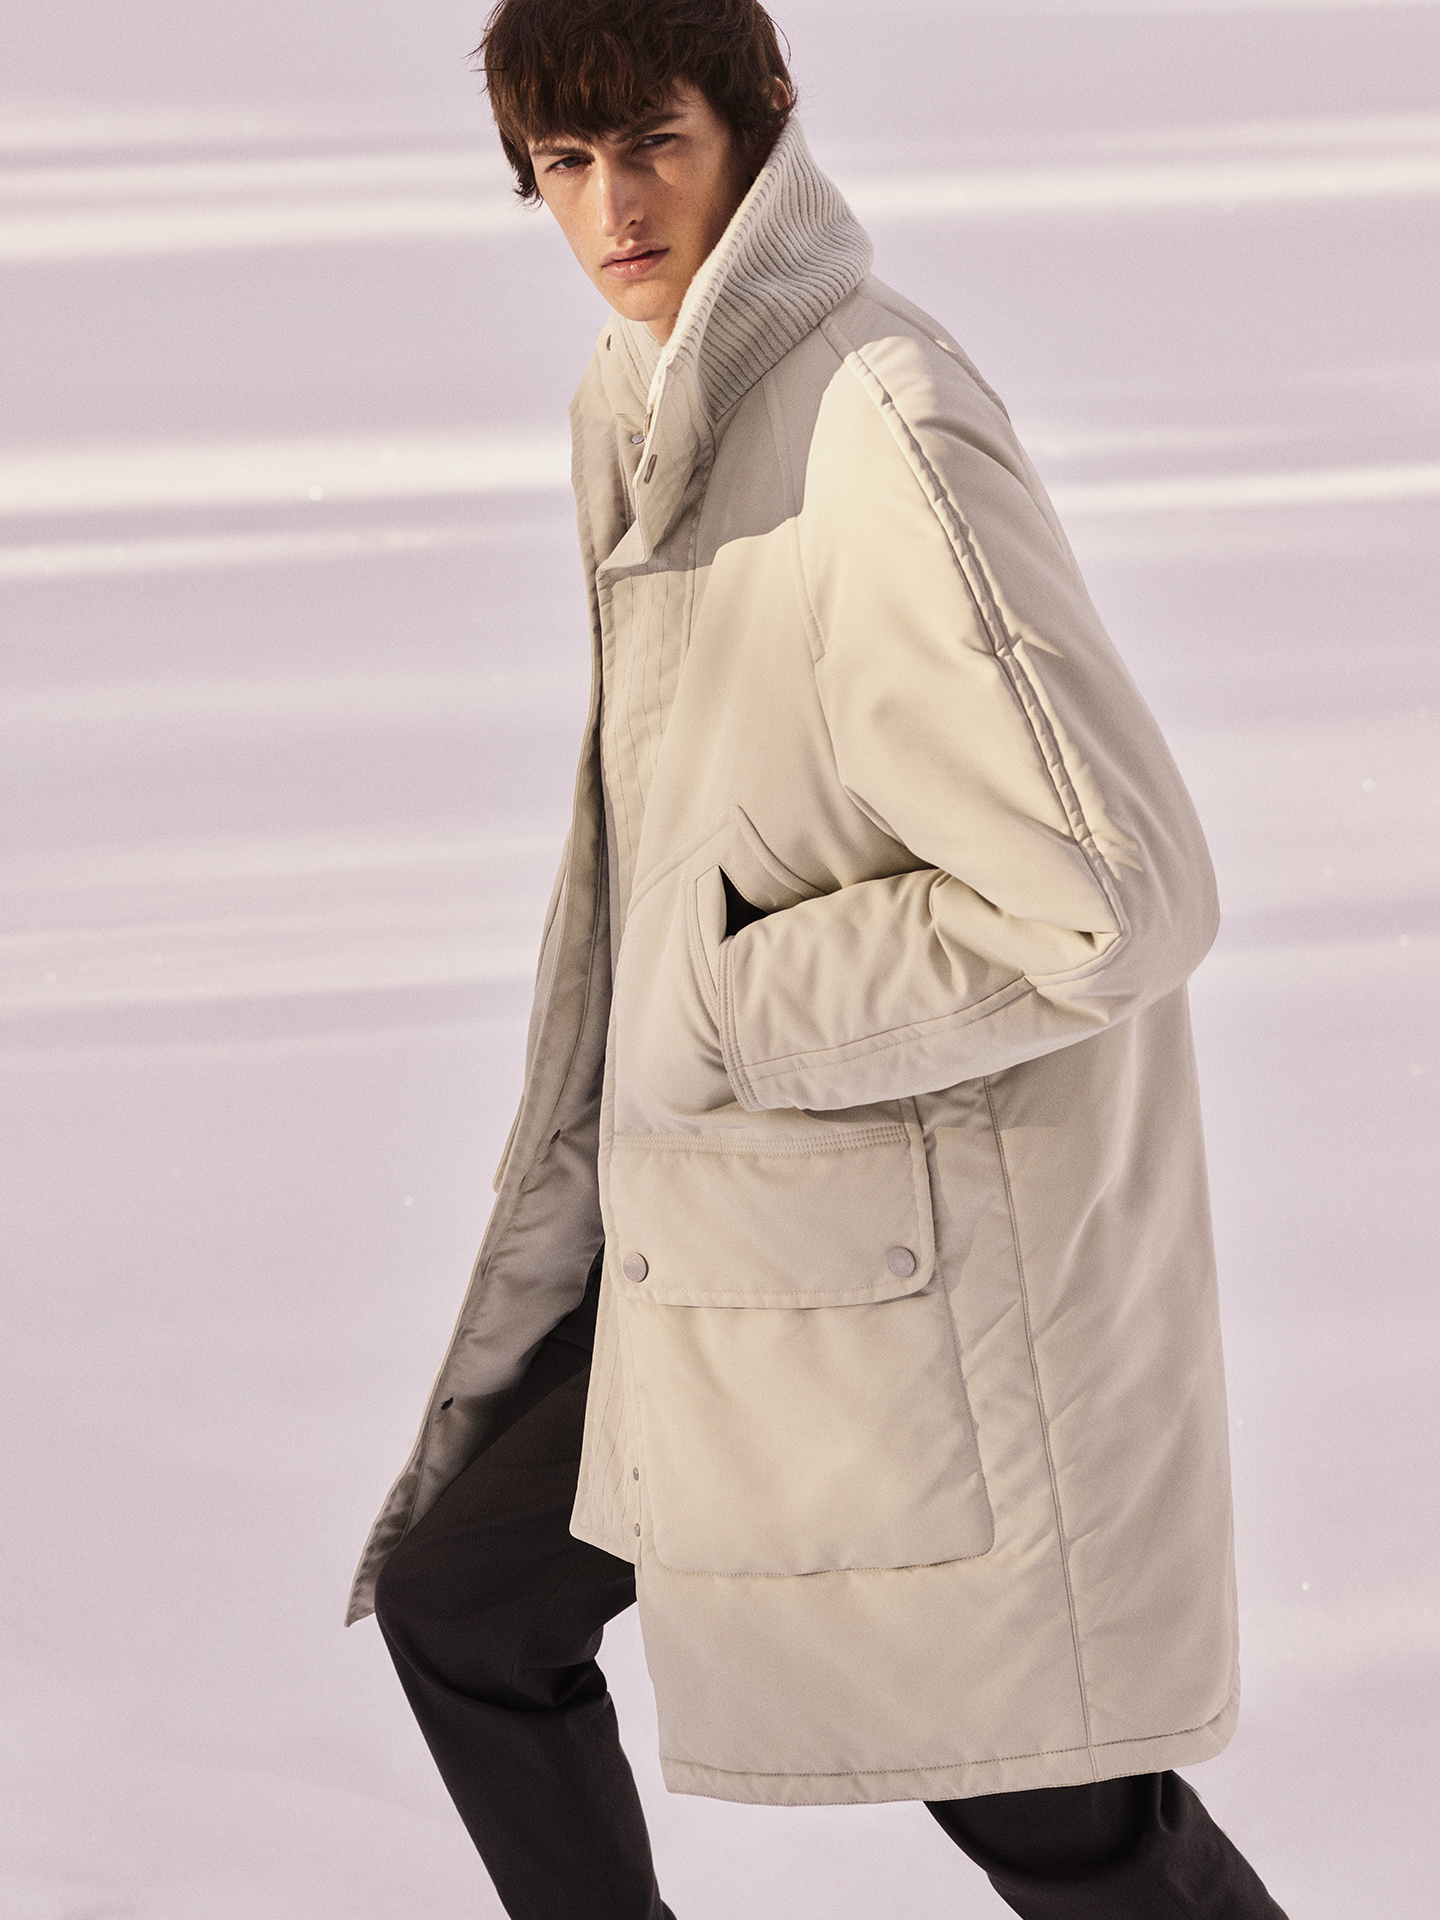 Model wearing a cream winter coat at Hermès Winter Camp